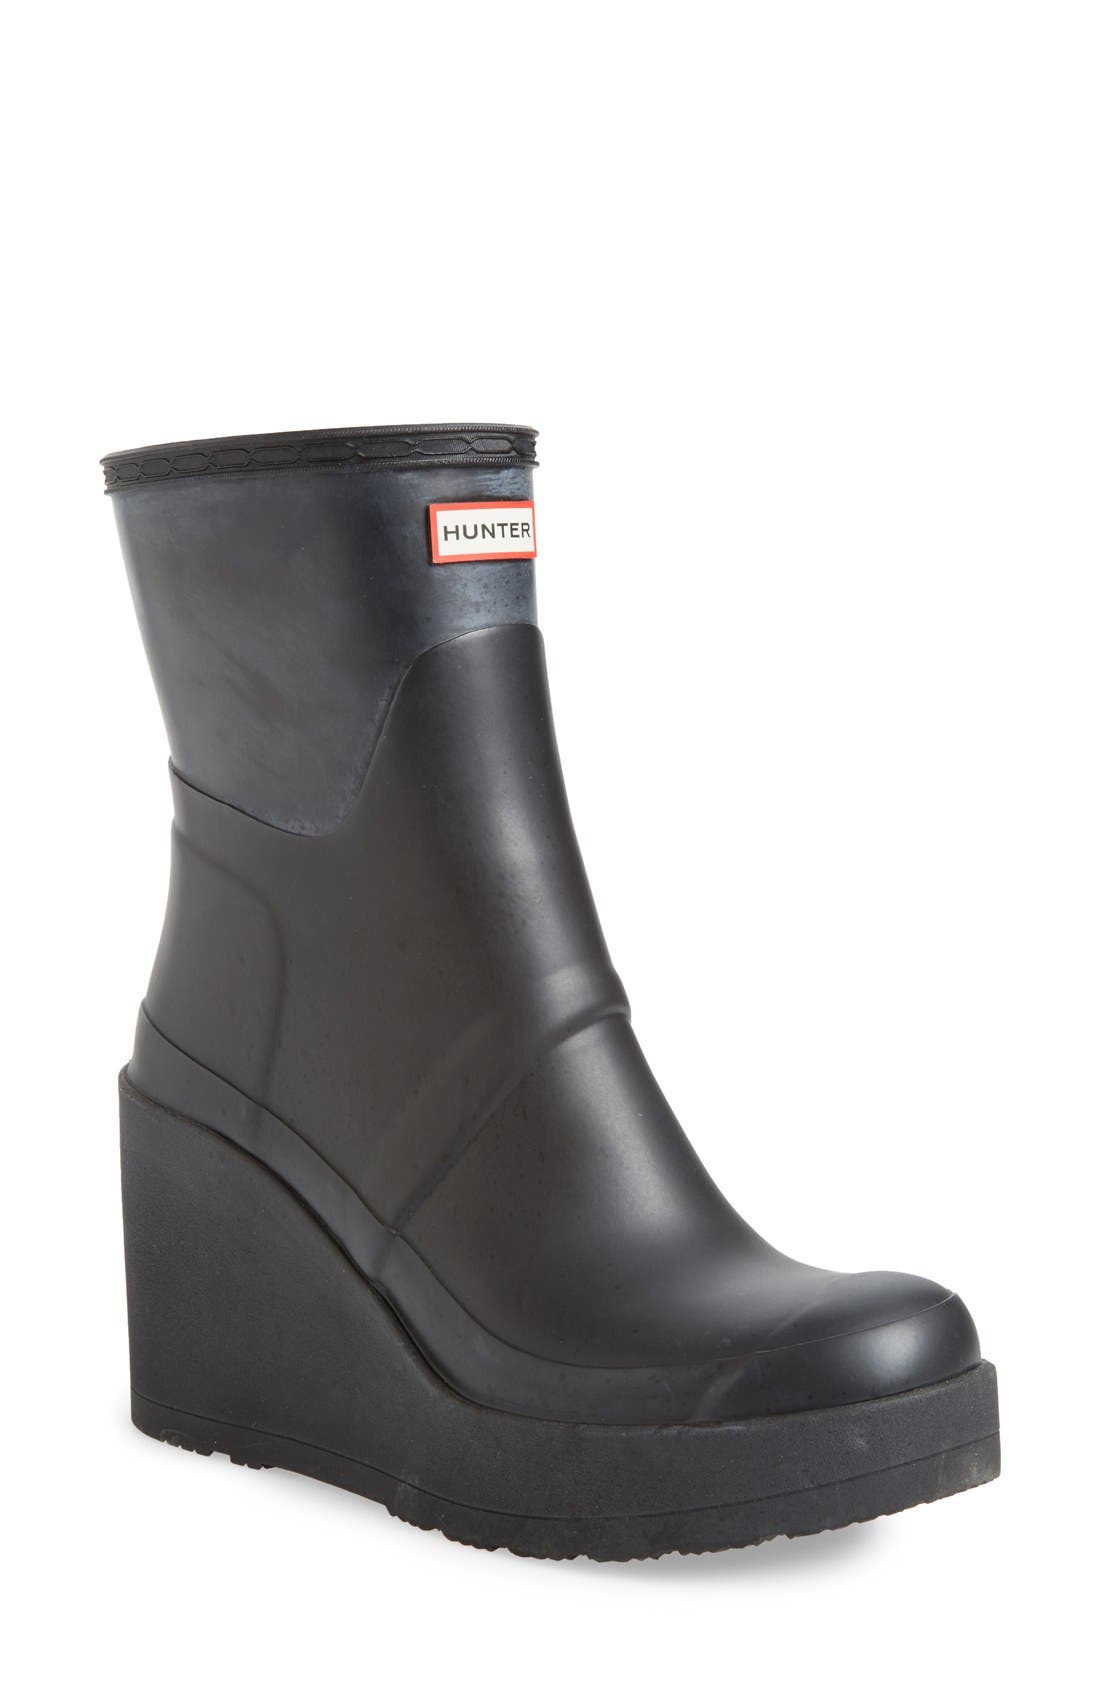 hunter rain boots with wedge heel